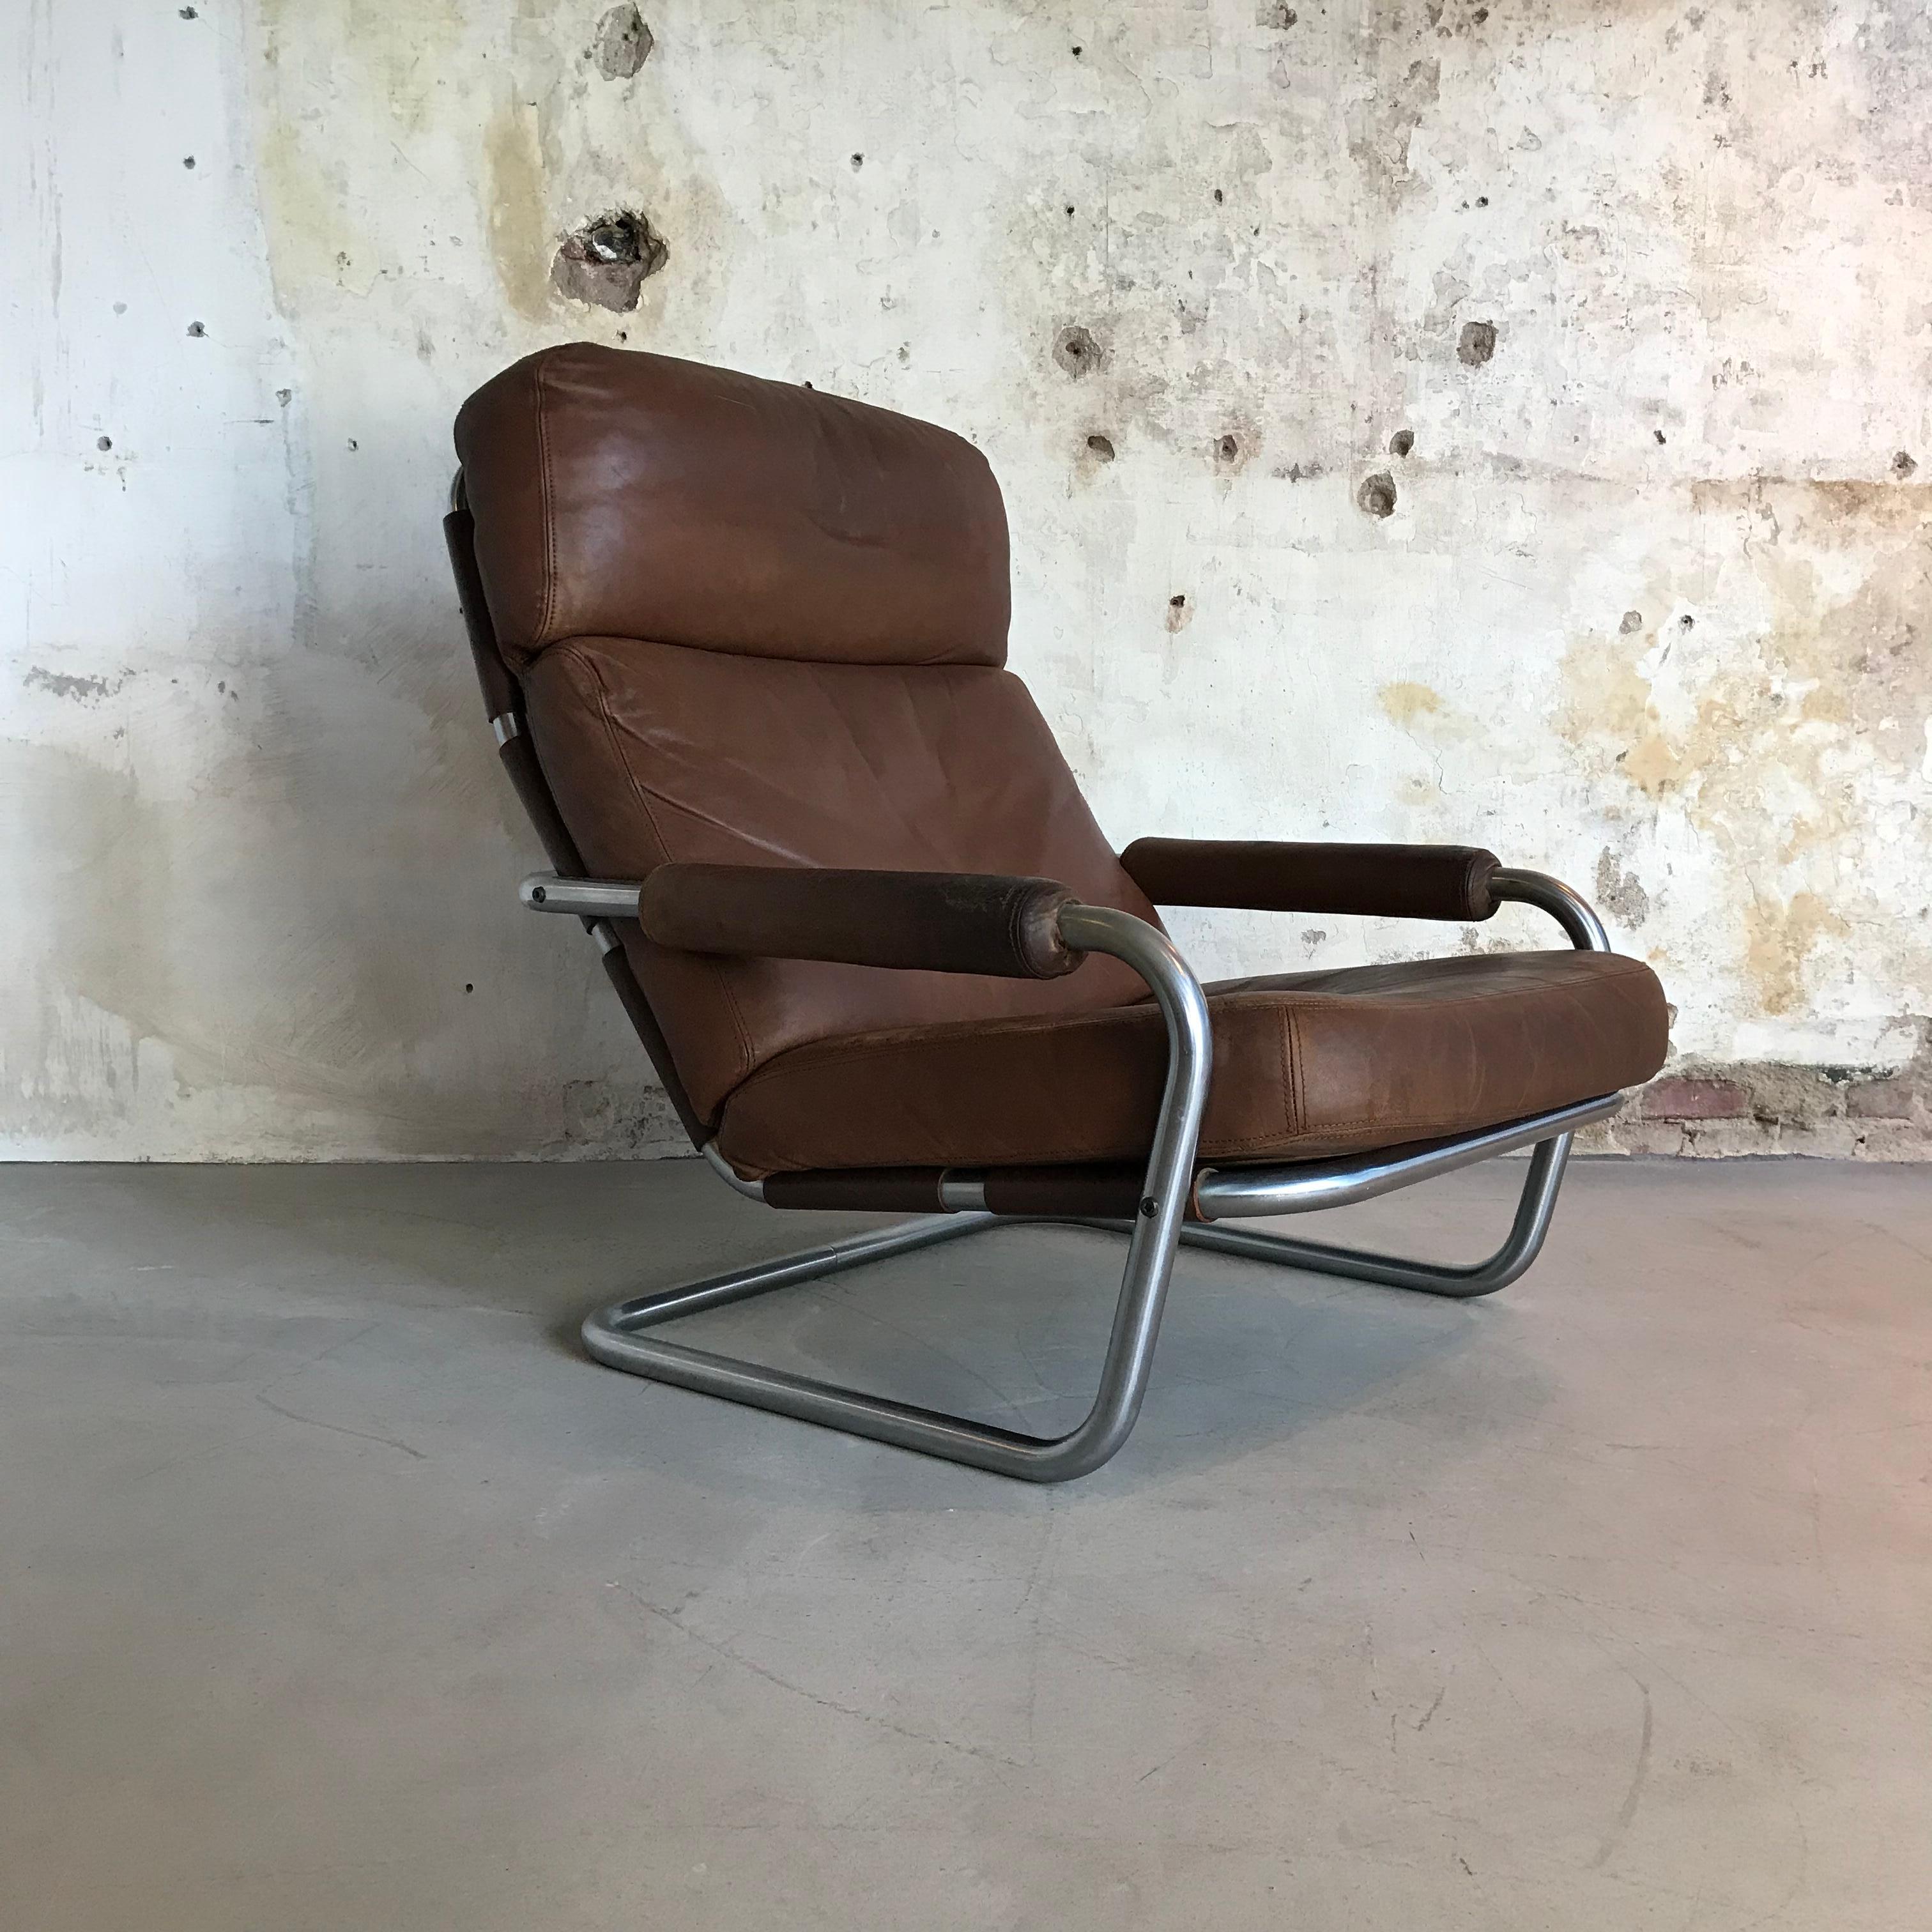 Dutch 'Mister Oberman' Lounge Chair by Jan des Bouvrie for Gelderland, 1970s